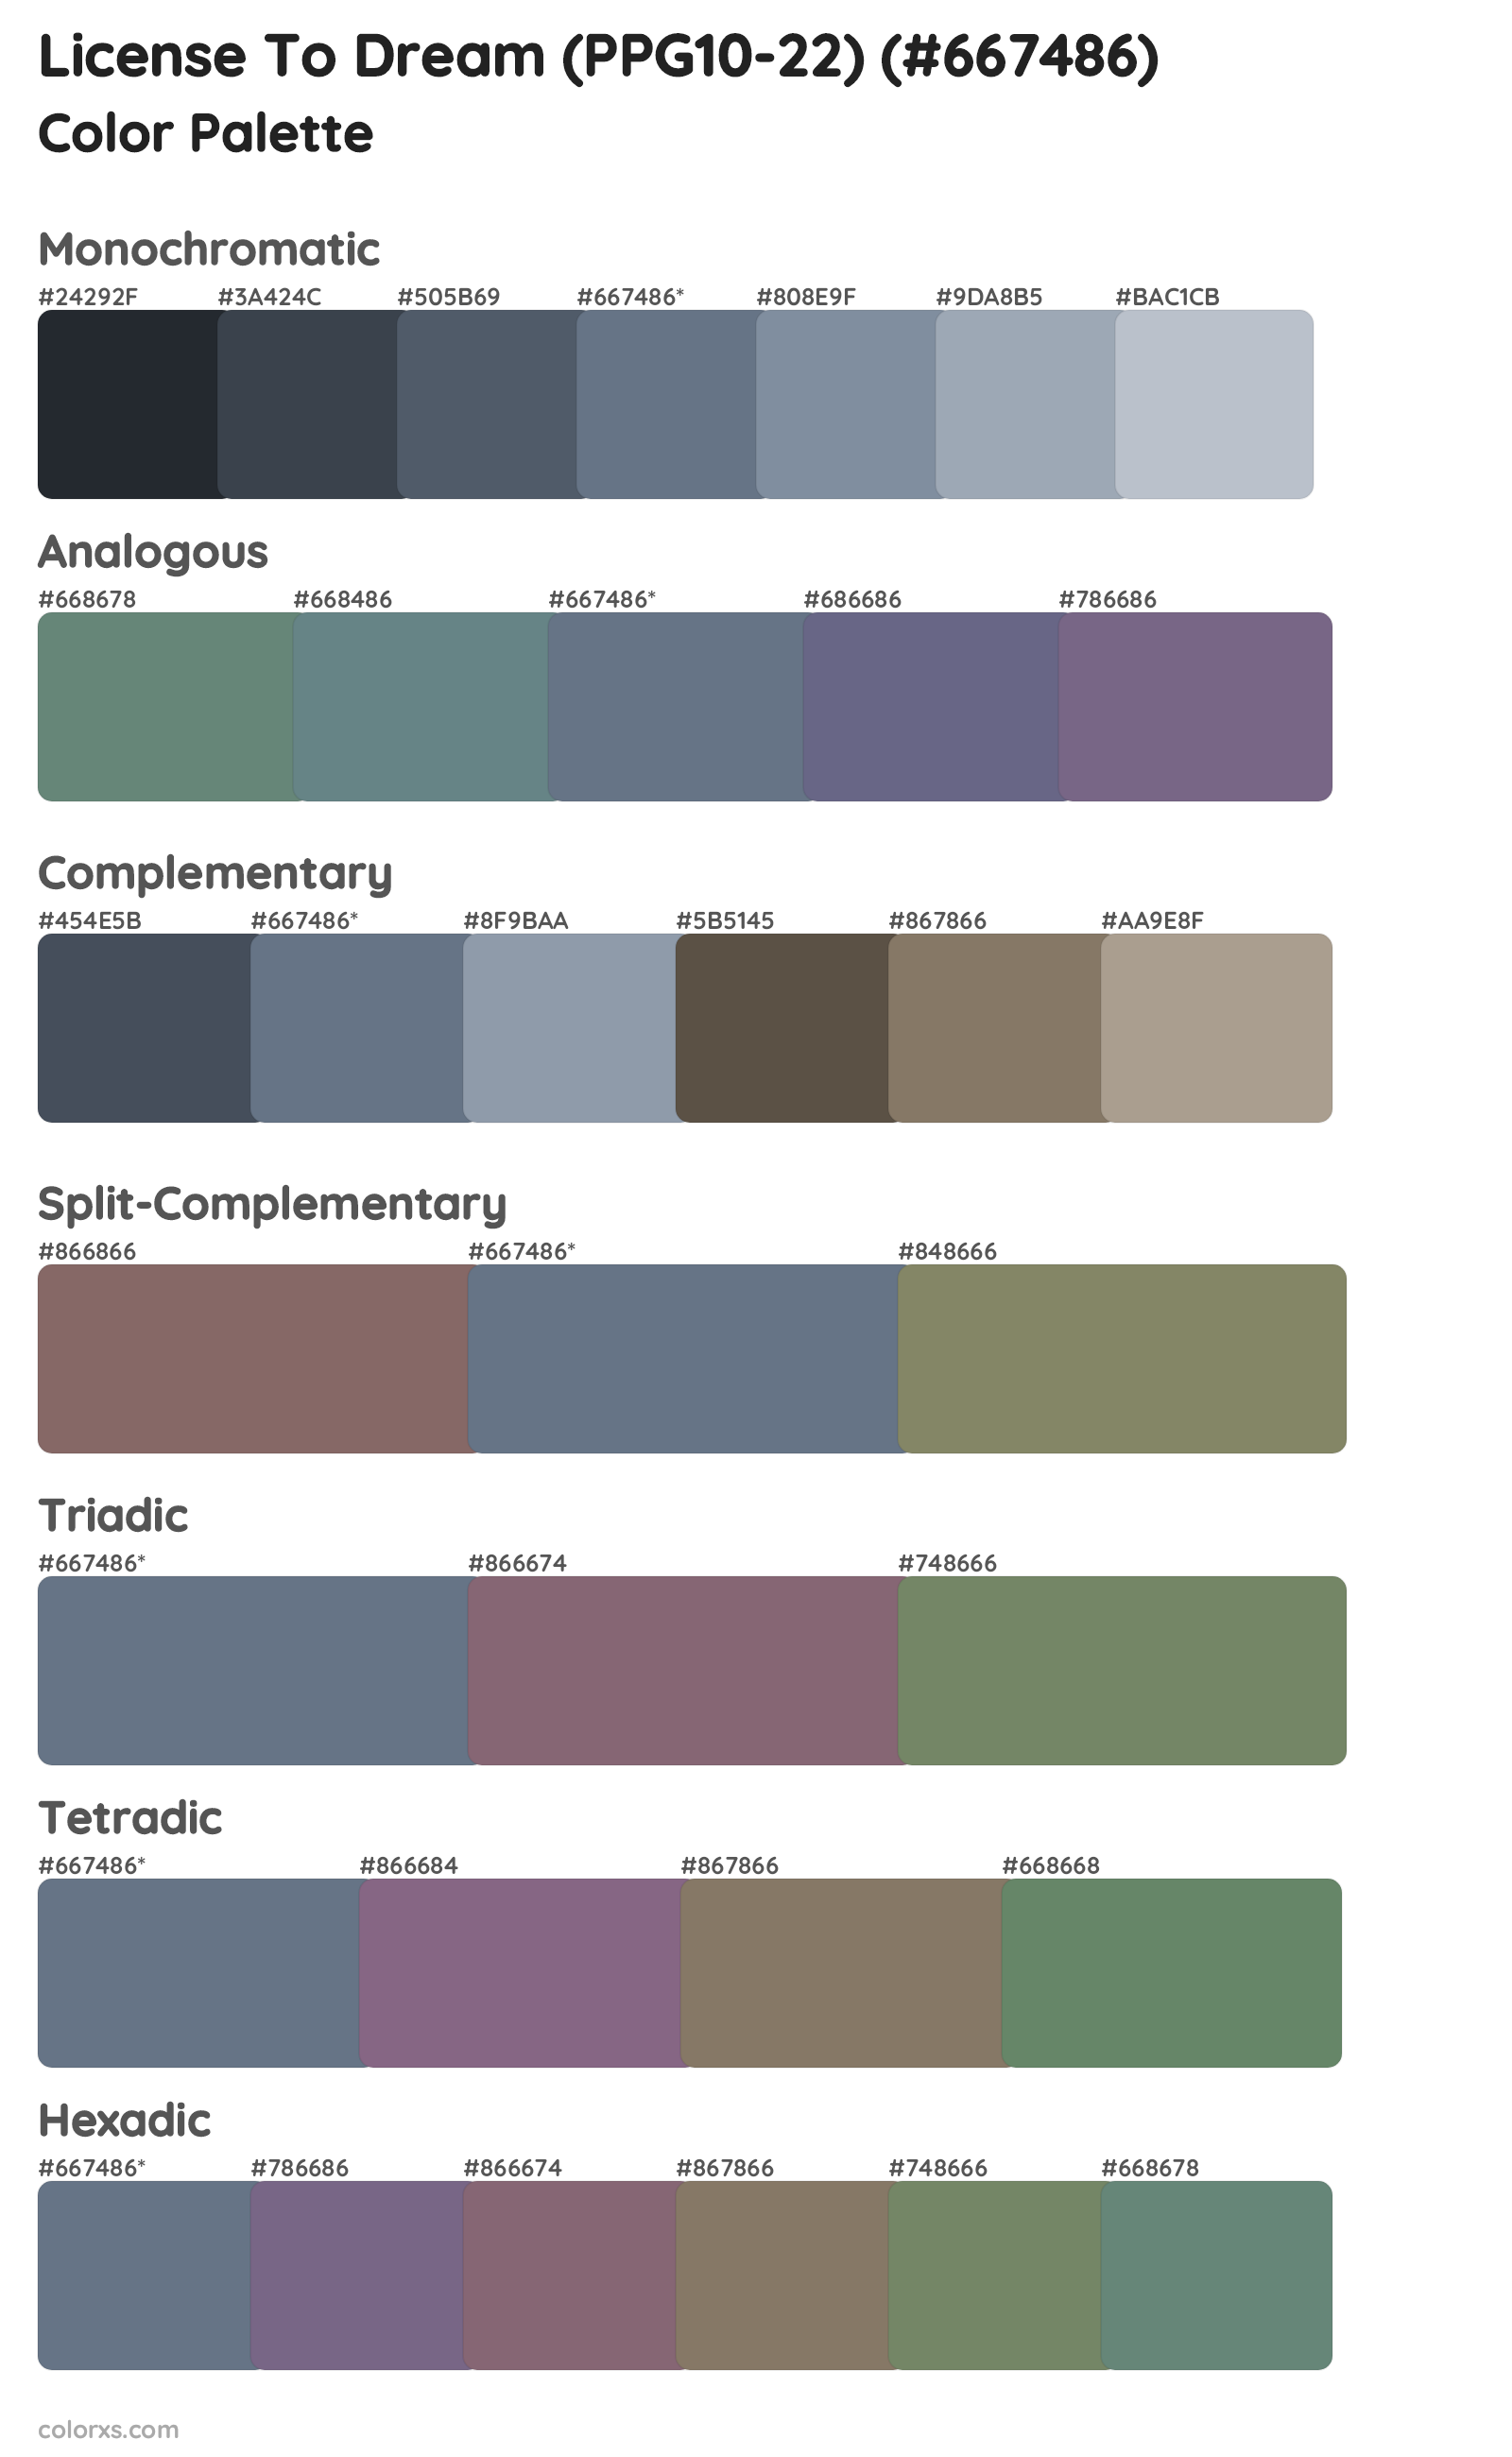 License To Dream (PPG10-22) Color Scheme Palettes